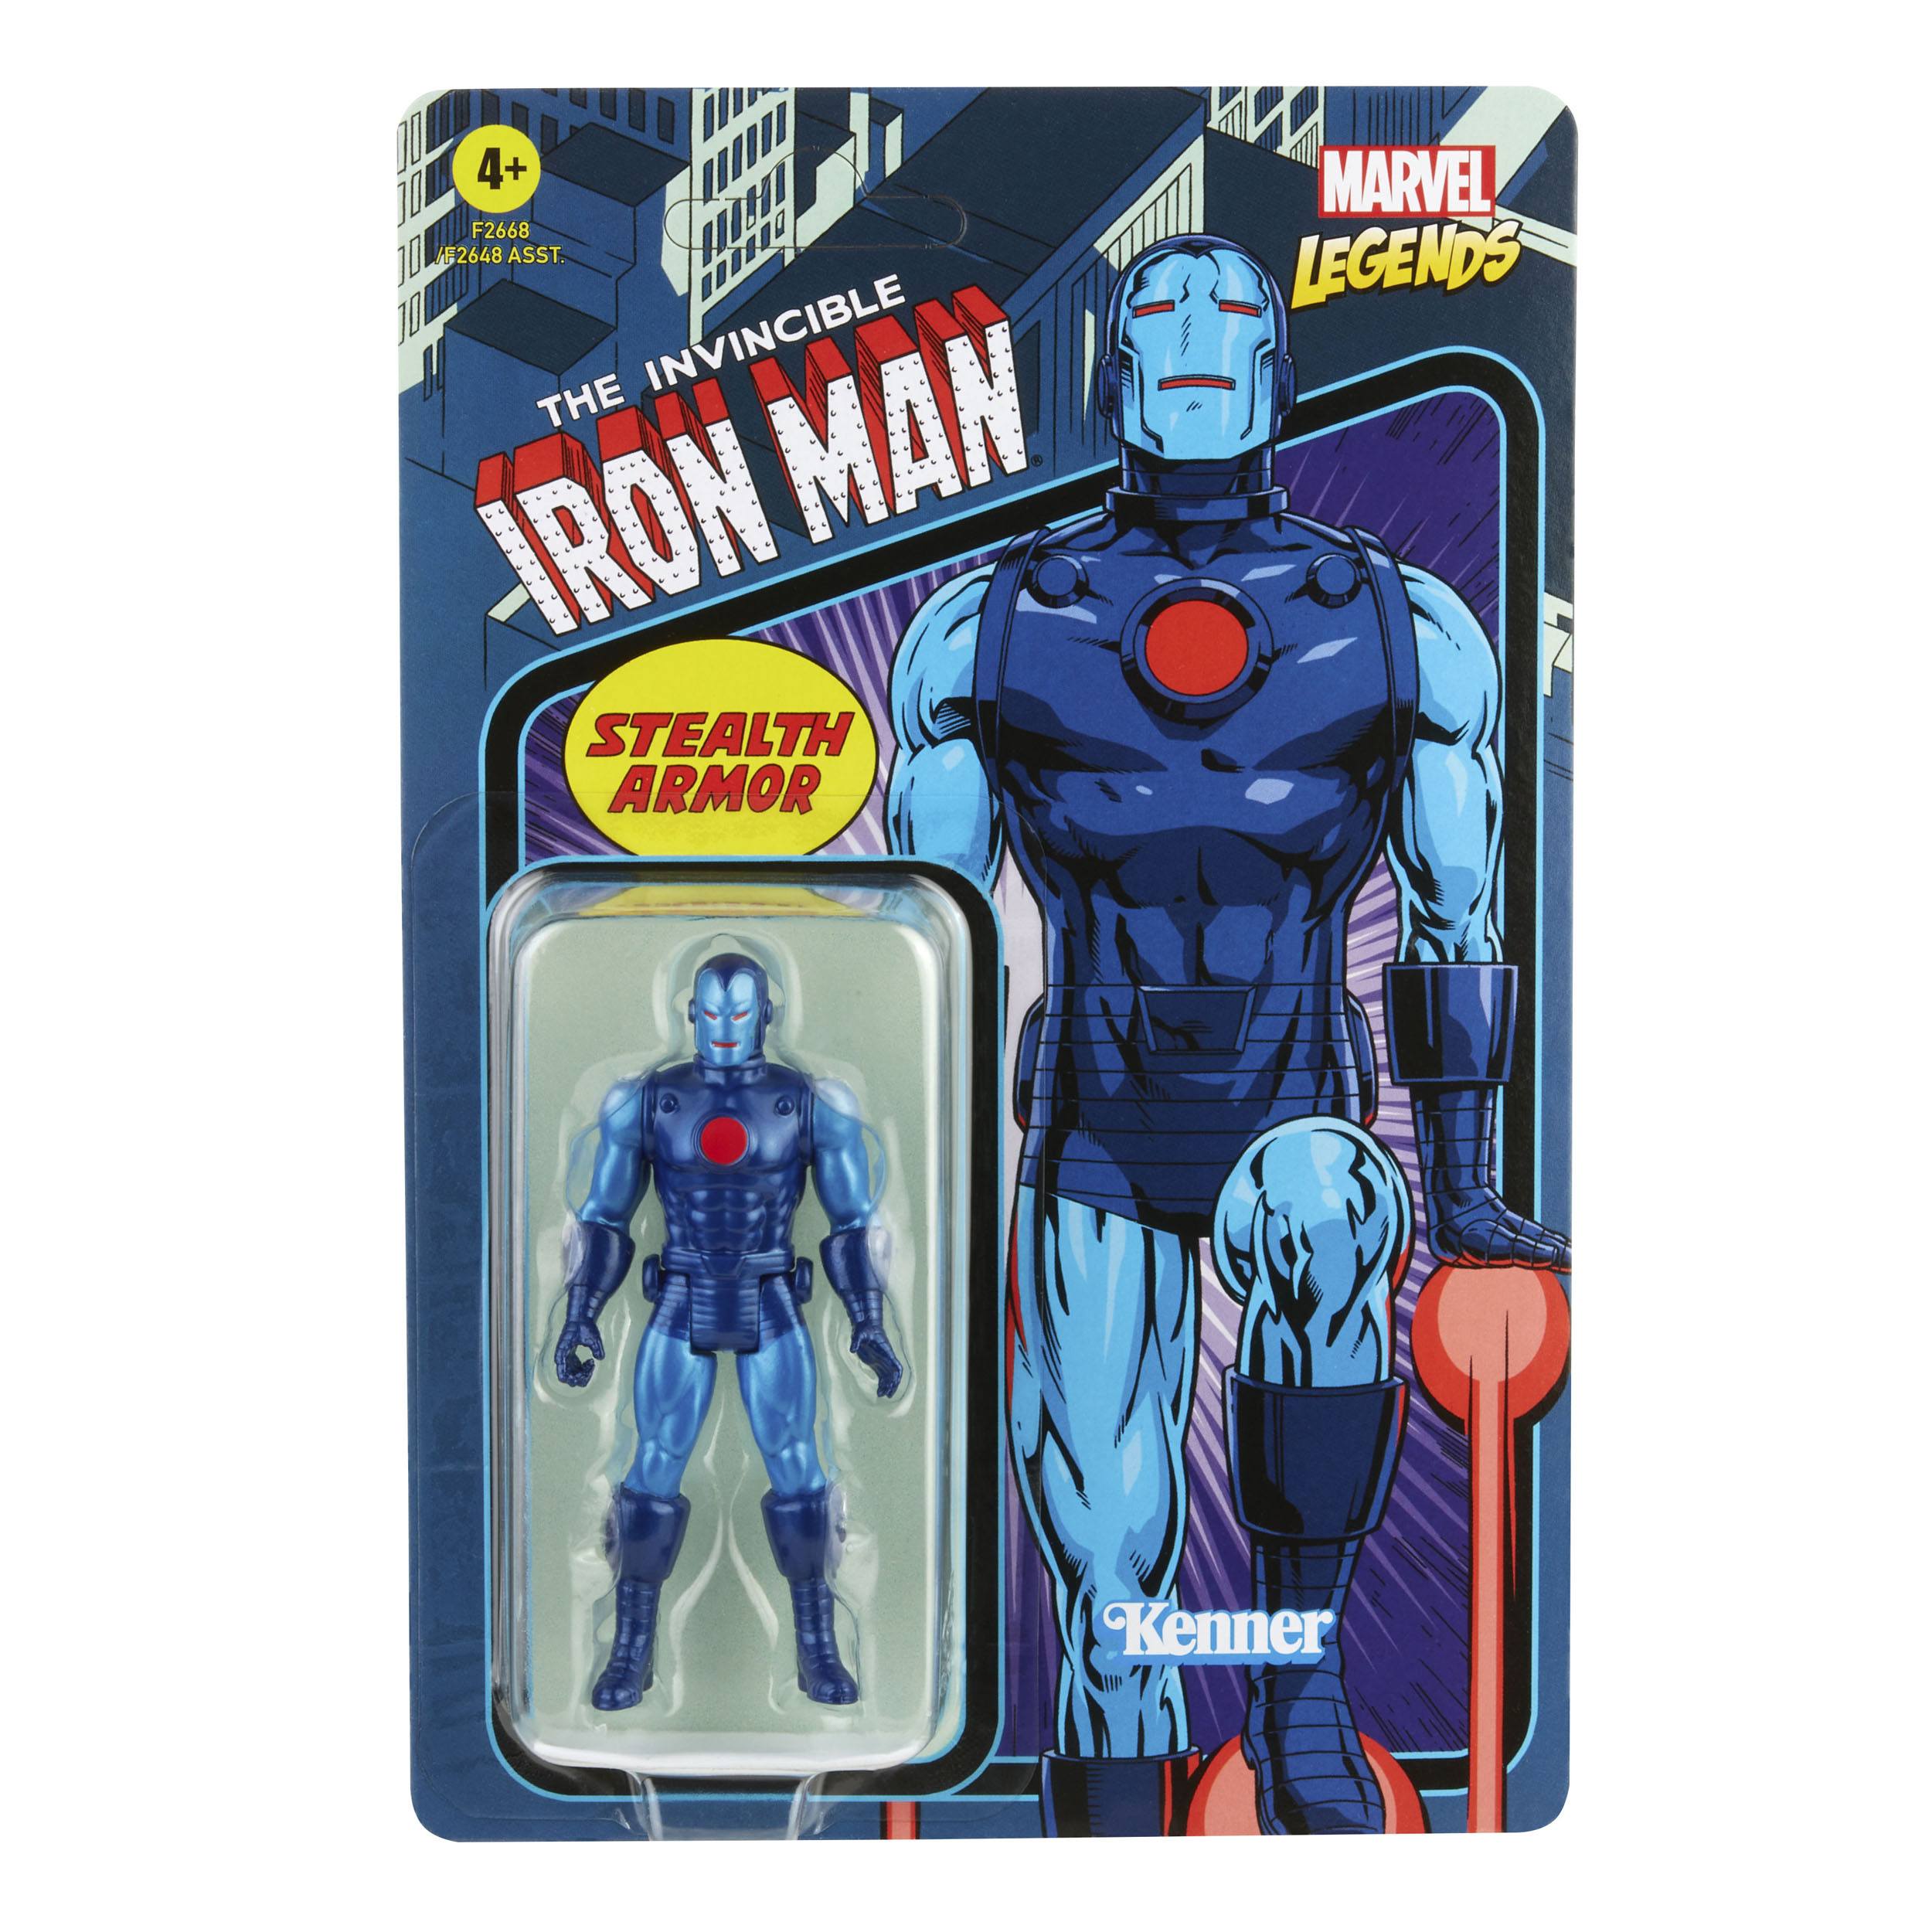 Marvel Legends Retro Collection Series Actionfiguren 10 cm Stealth Iron Man F26485L03 5010993842766